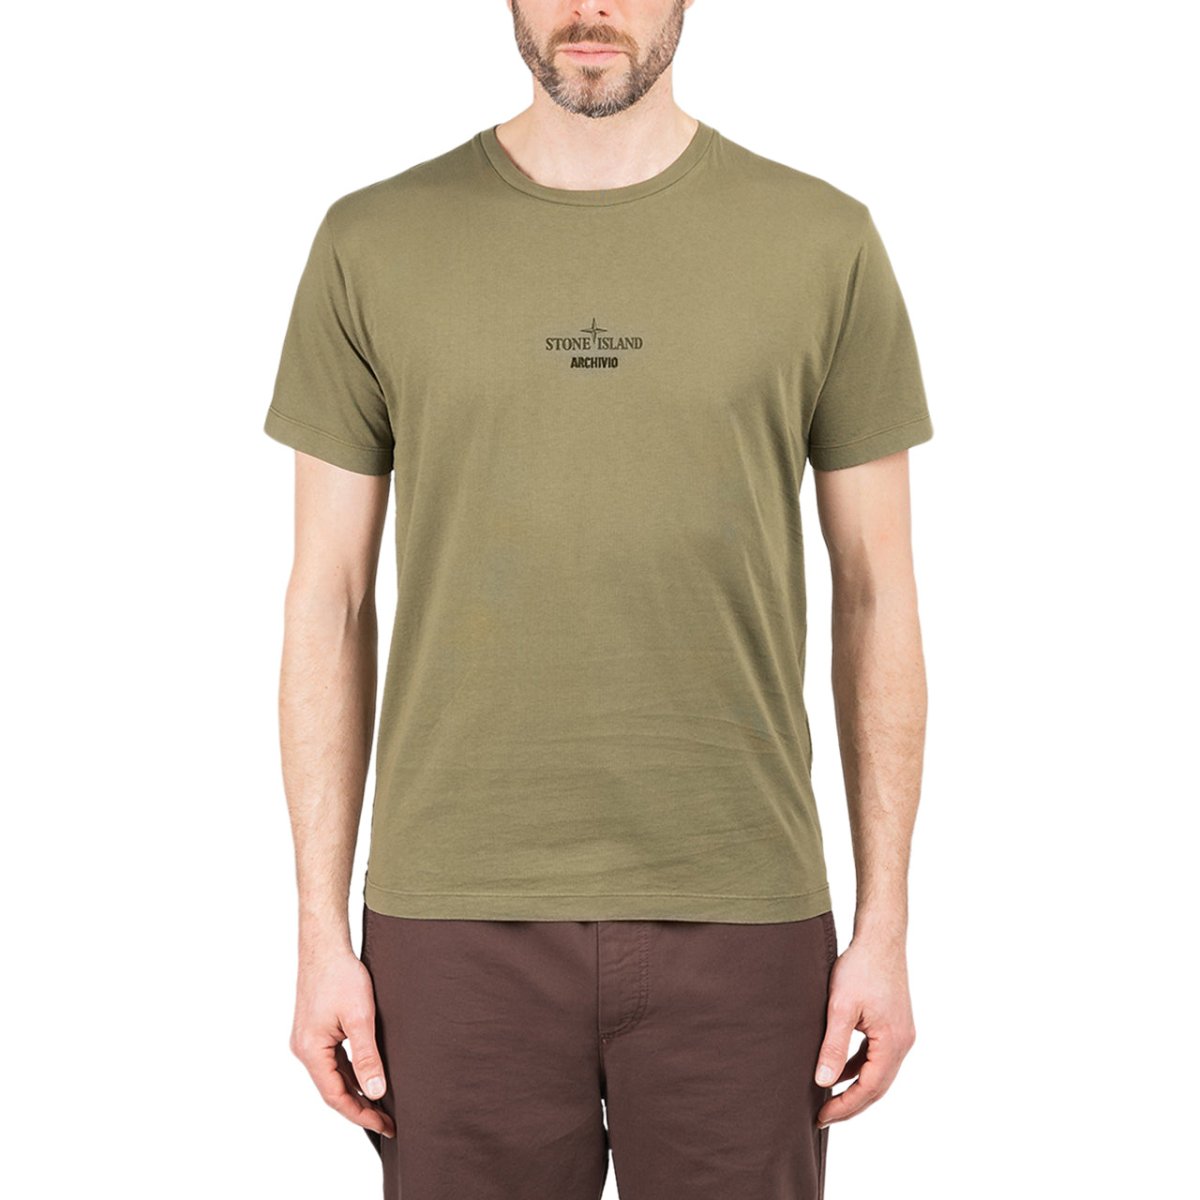 Stone Island Archivio T-Shirt (Olive)  - Allike Store